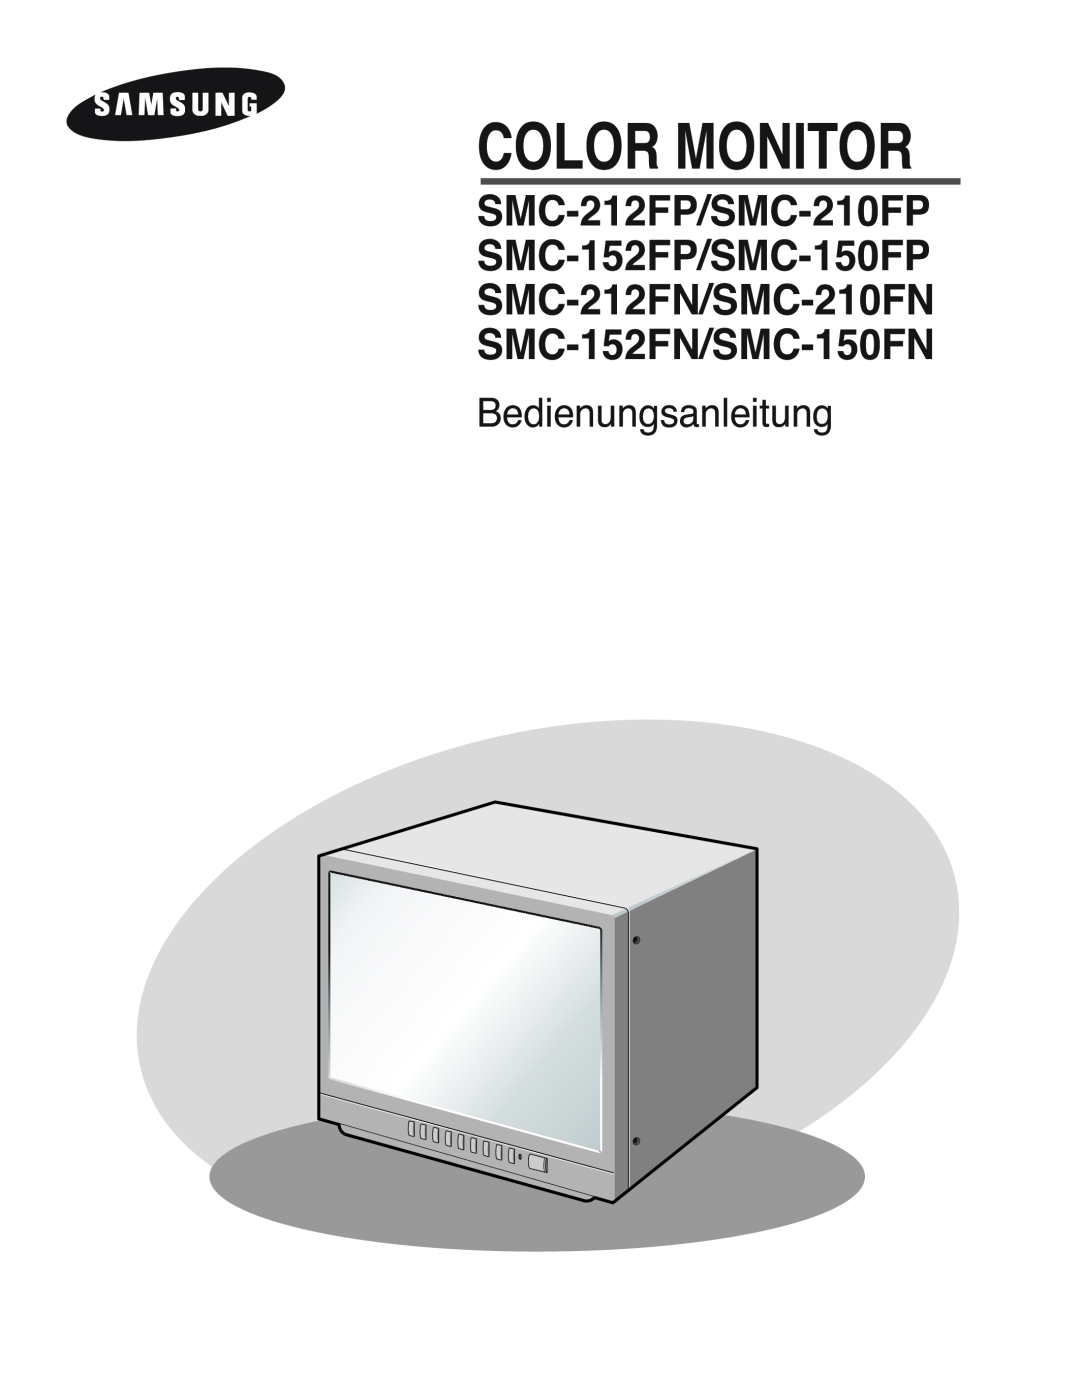 Samsung SMC-212FP, SMC-150FP, SMC-152FPV, SMC-210FPV manual Bedienungsanleitung, Color Monitor 